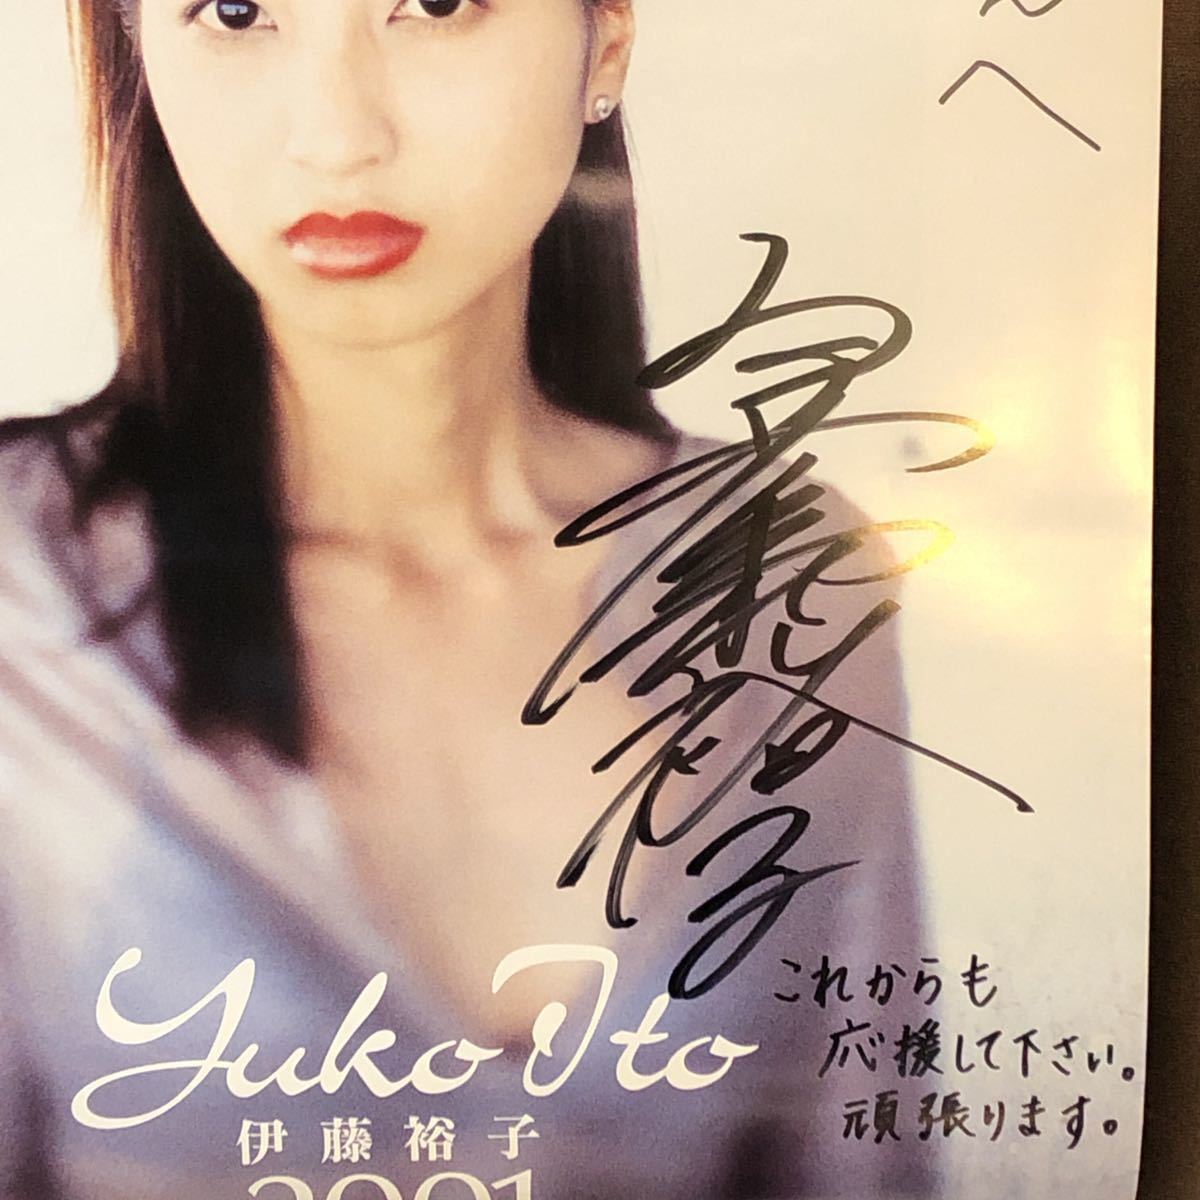  Ito Yuuko 2001 год календарь с автографом адрес ввод Yuko Ito B2 размер постер календарь 